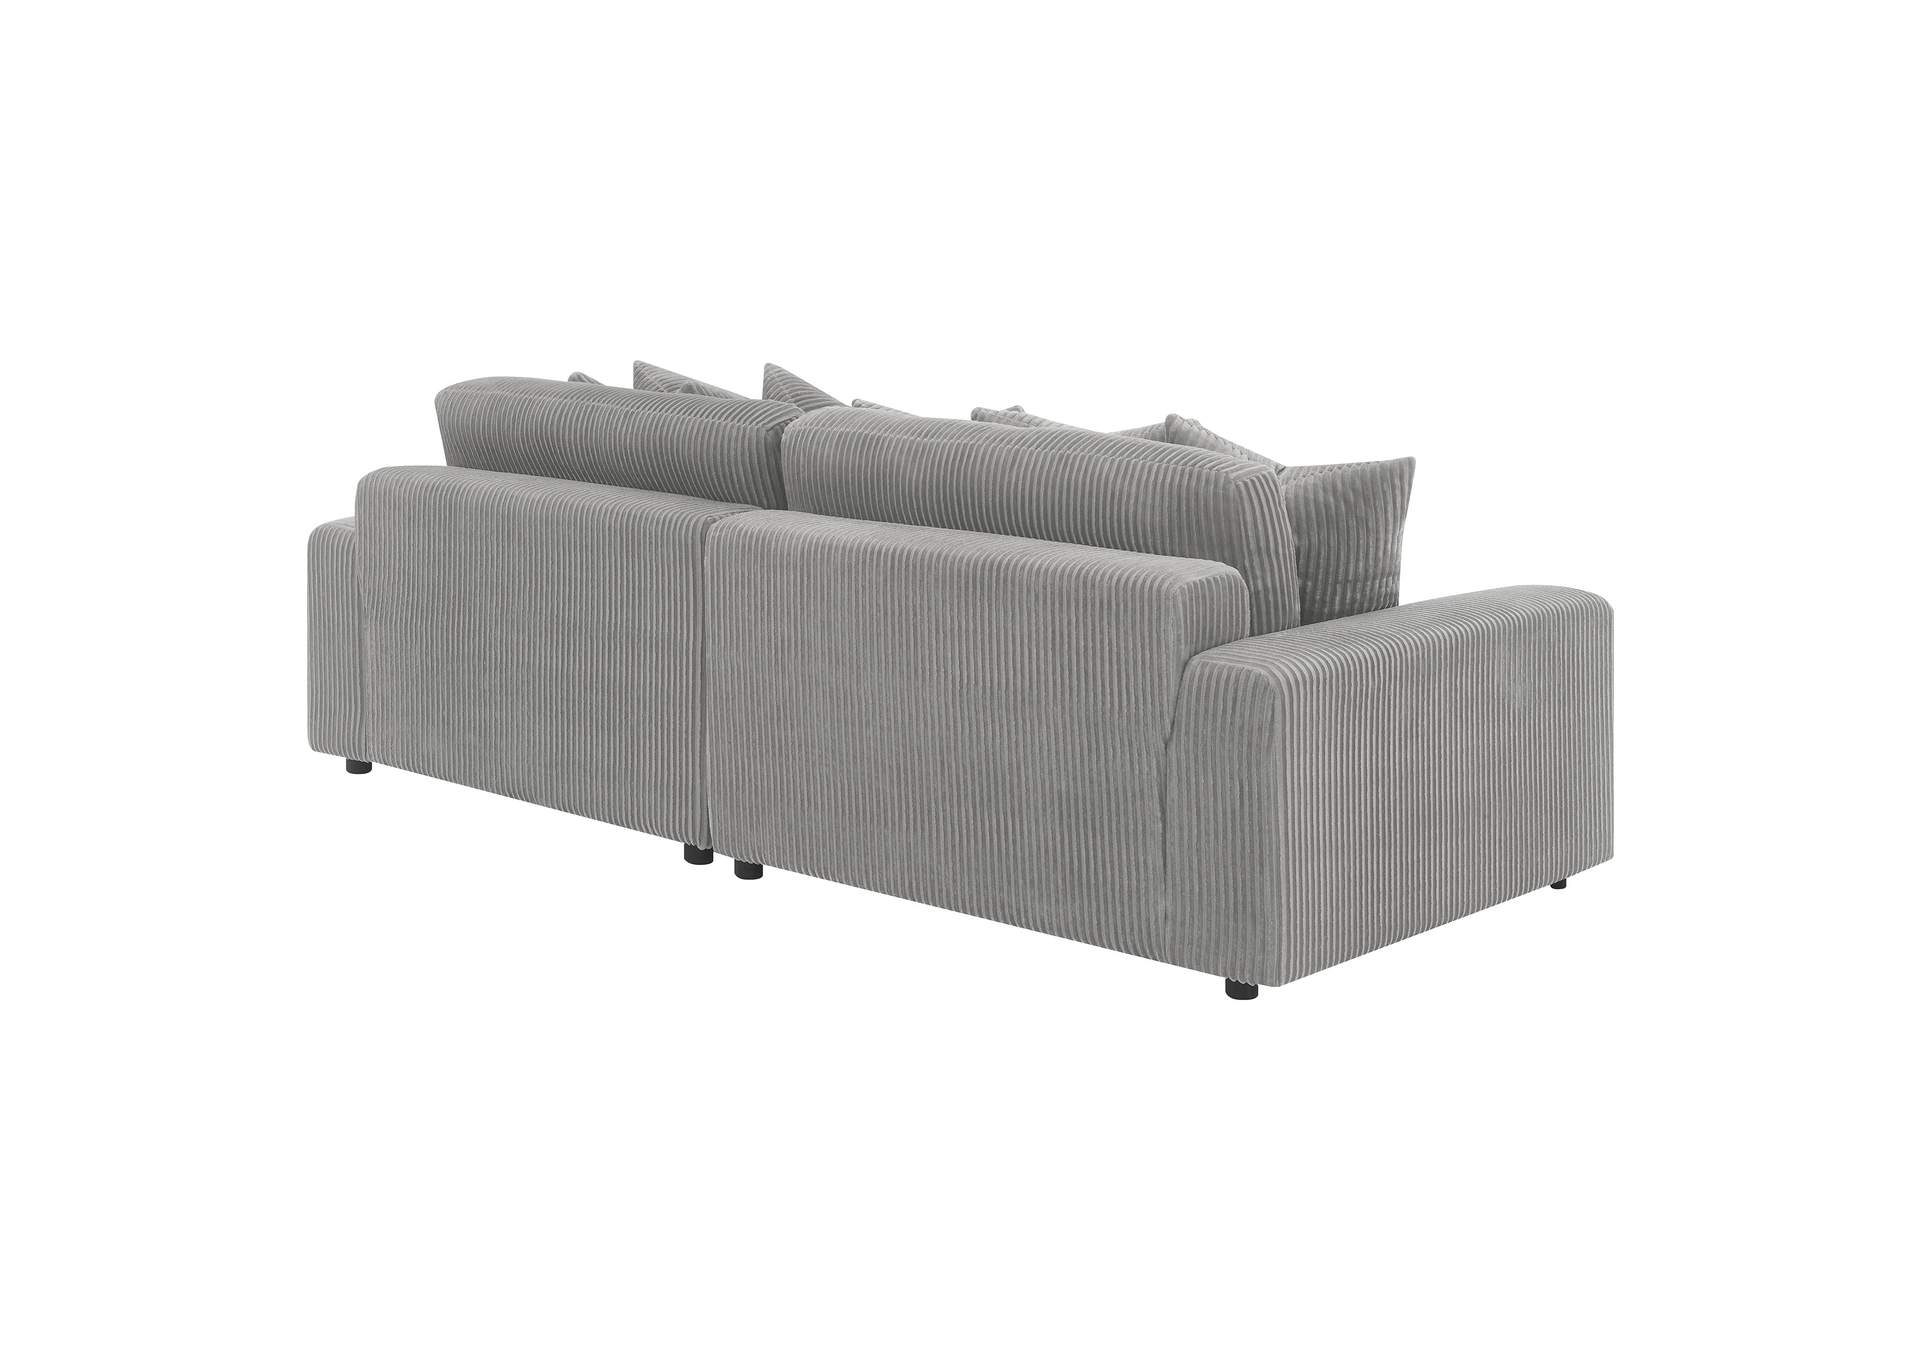 Blaine Upholstered Reversible Sectional Fog,Coaster Furniture